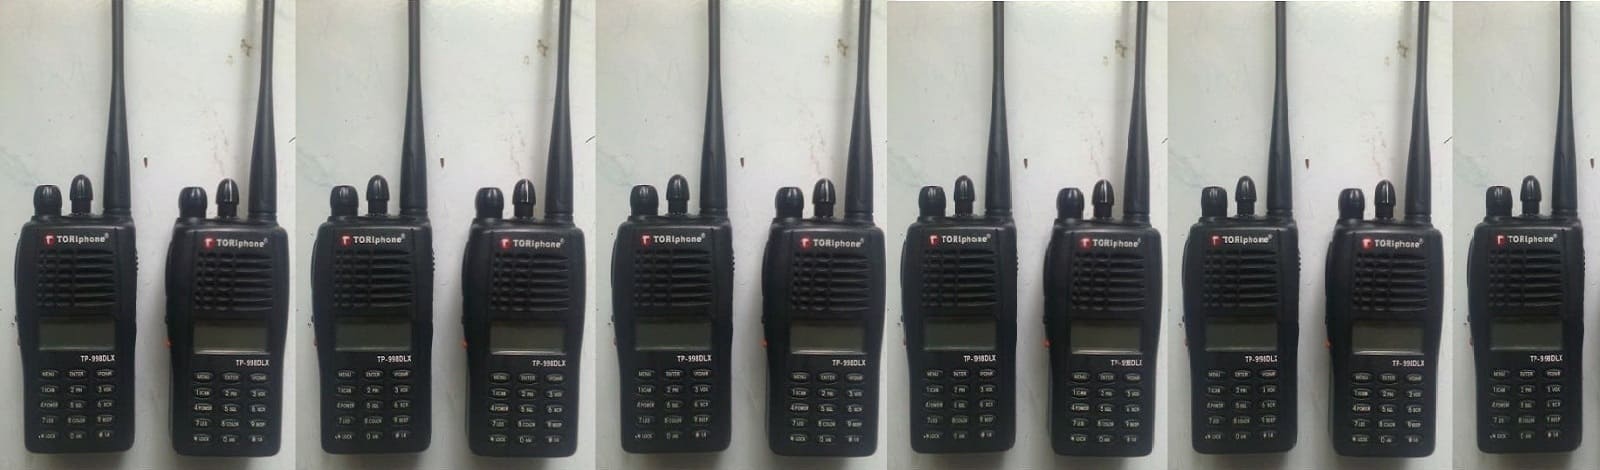 HT Toriphone TP 98 DLX | Sewa HT Bojongsari Baru, Depok, Jawa Barat | Rental Handy Talky Depok Murah